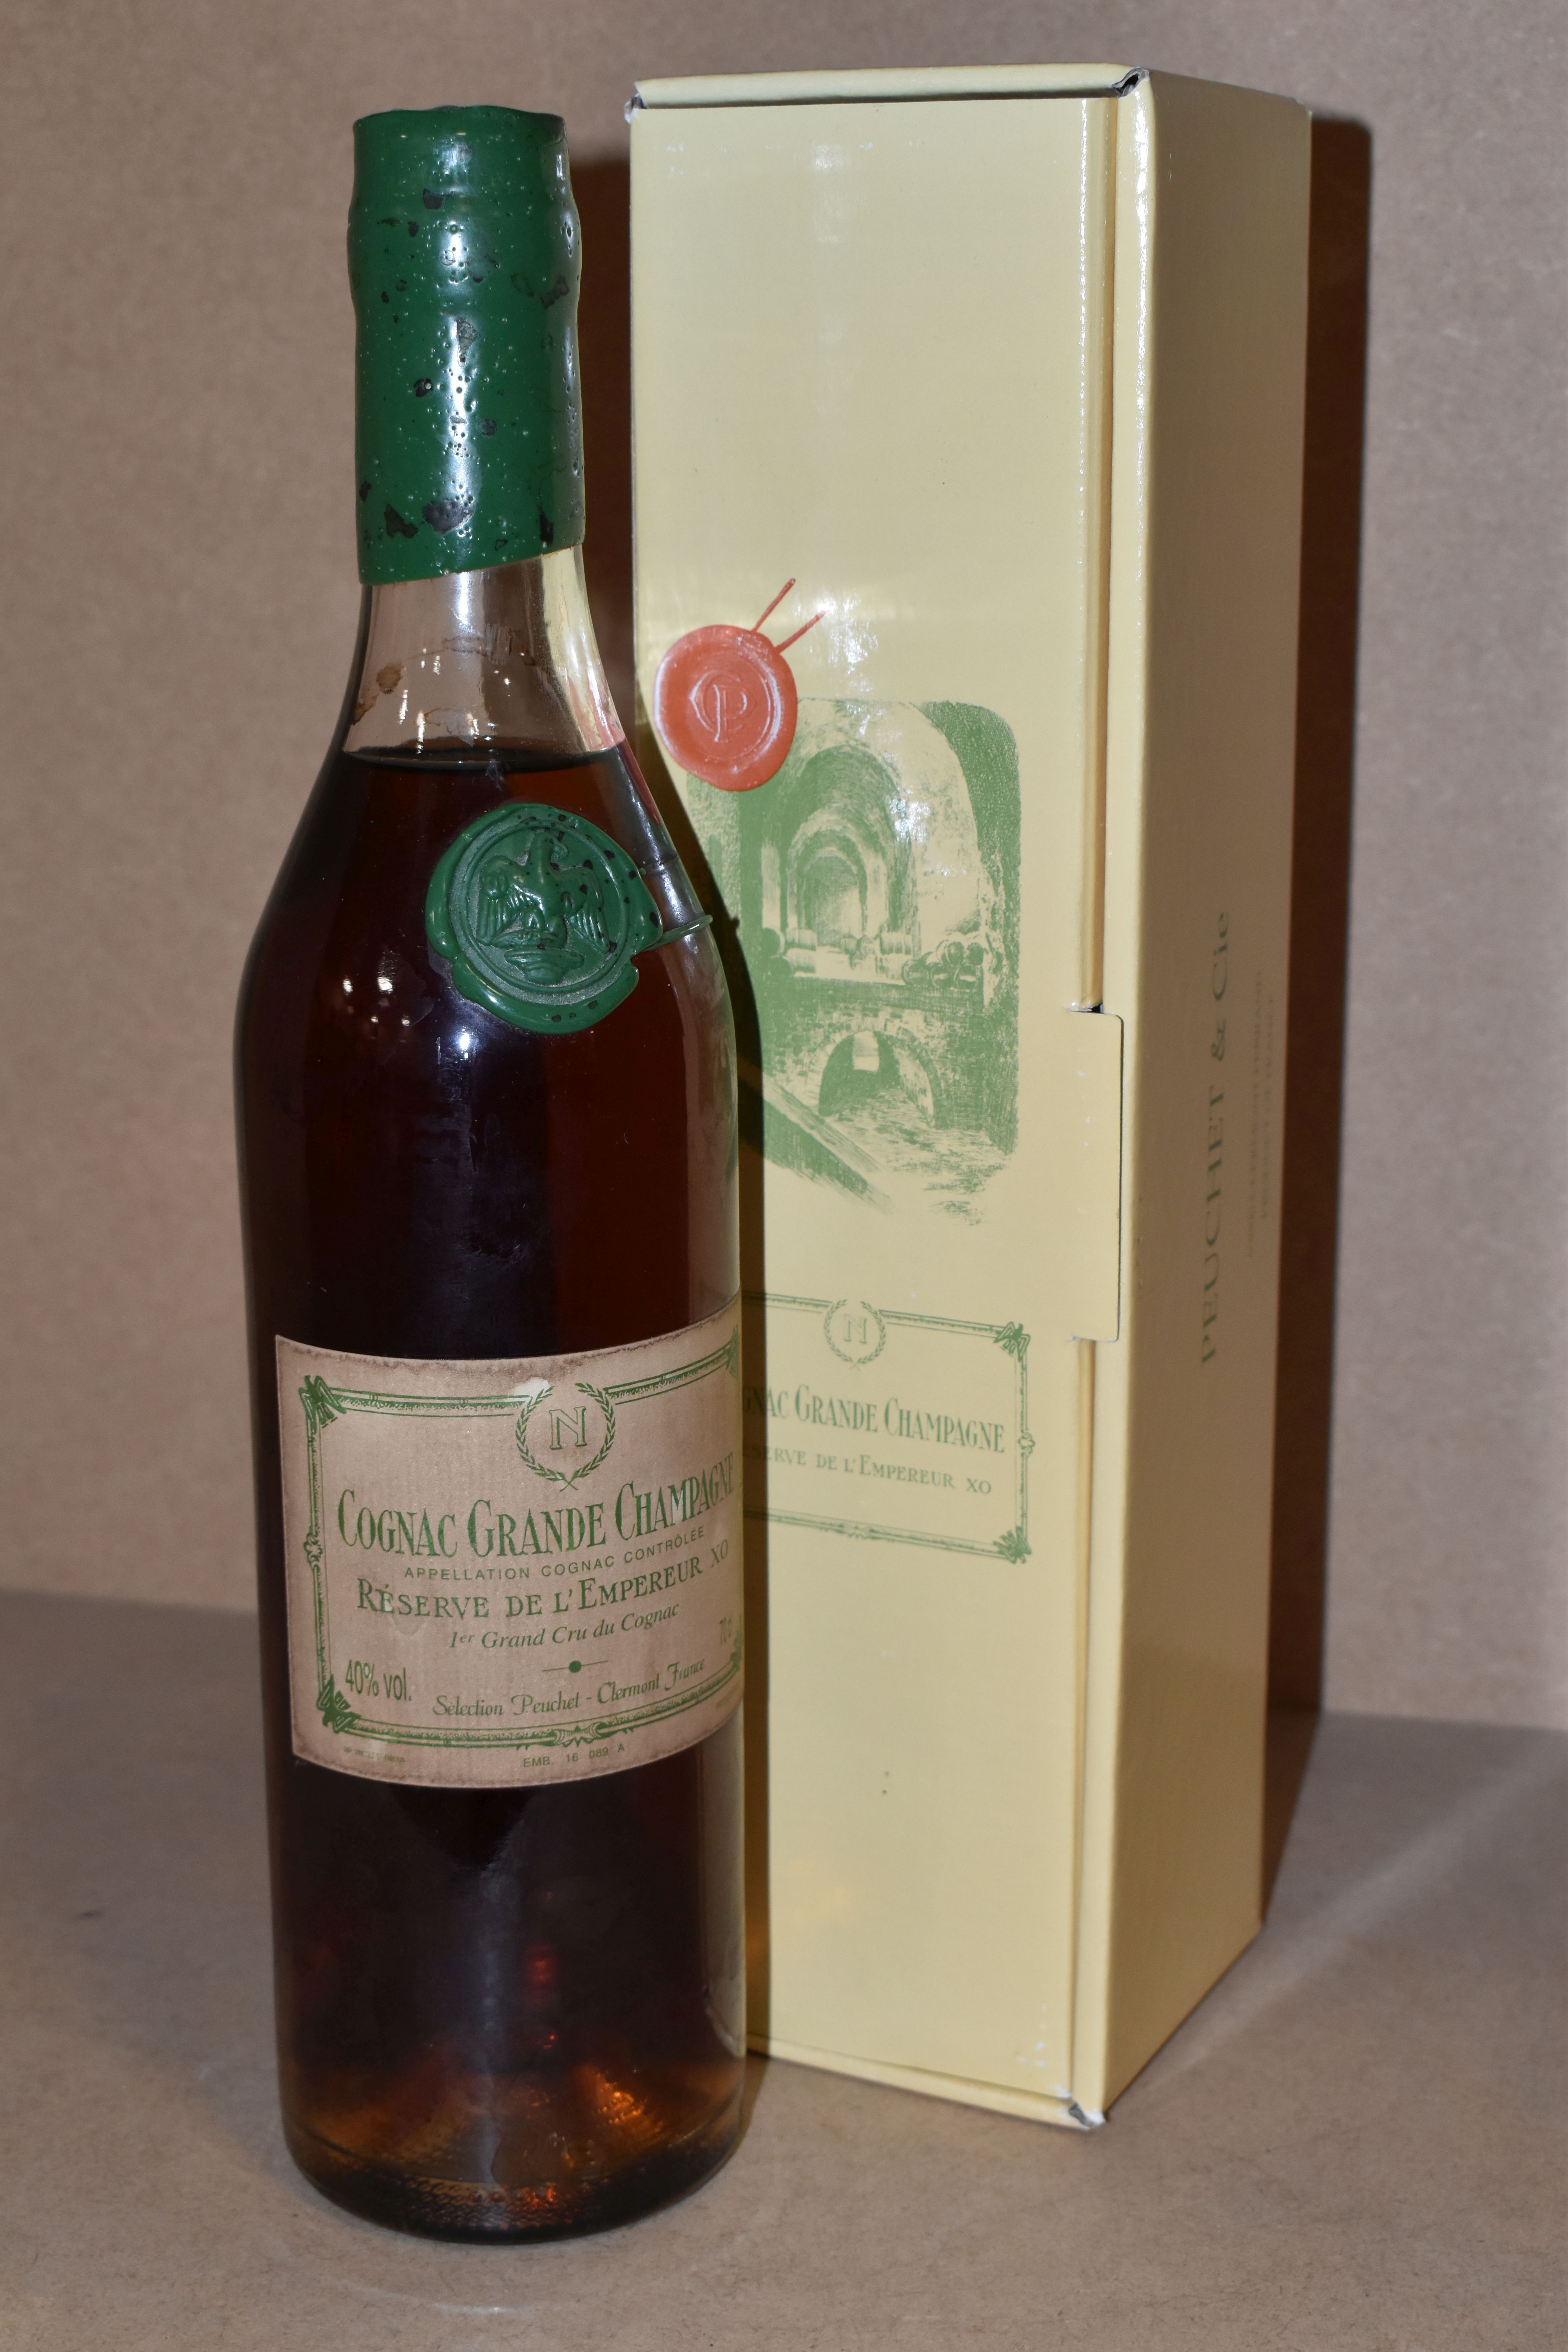 One Bottle of the Excellent COGNAC GRANDE CHAMPAGNE RESERVE DE L'EMPEREUR XO 1er Grand Cru du